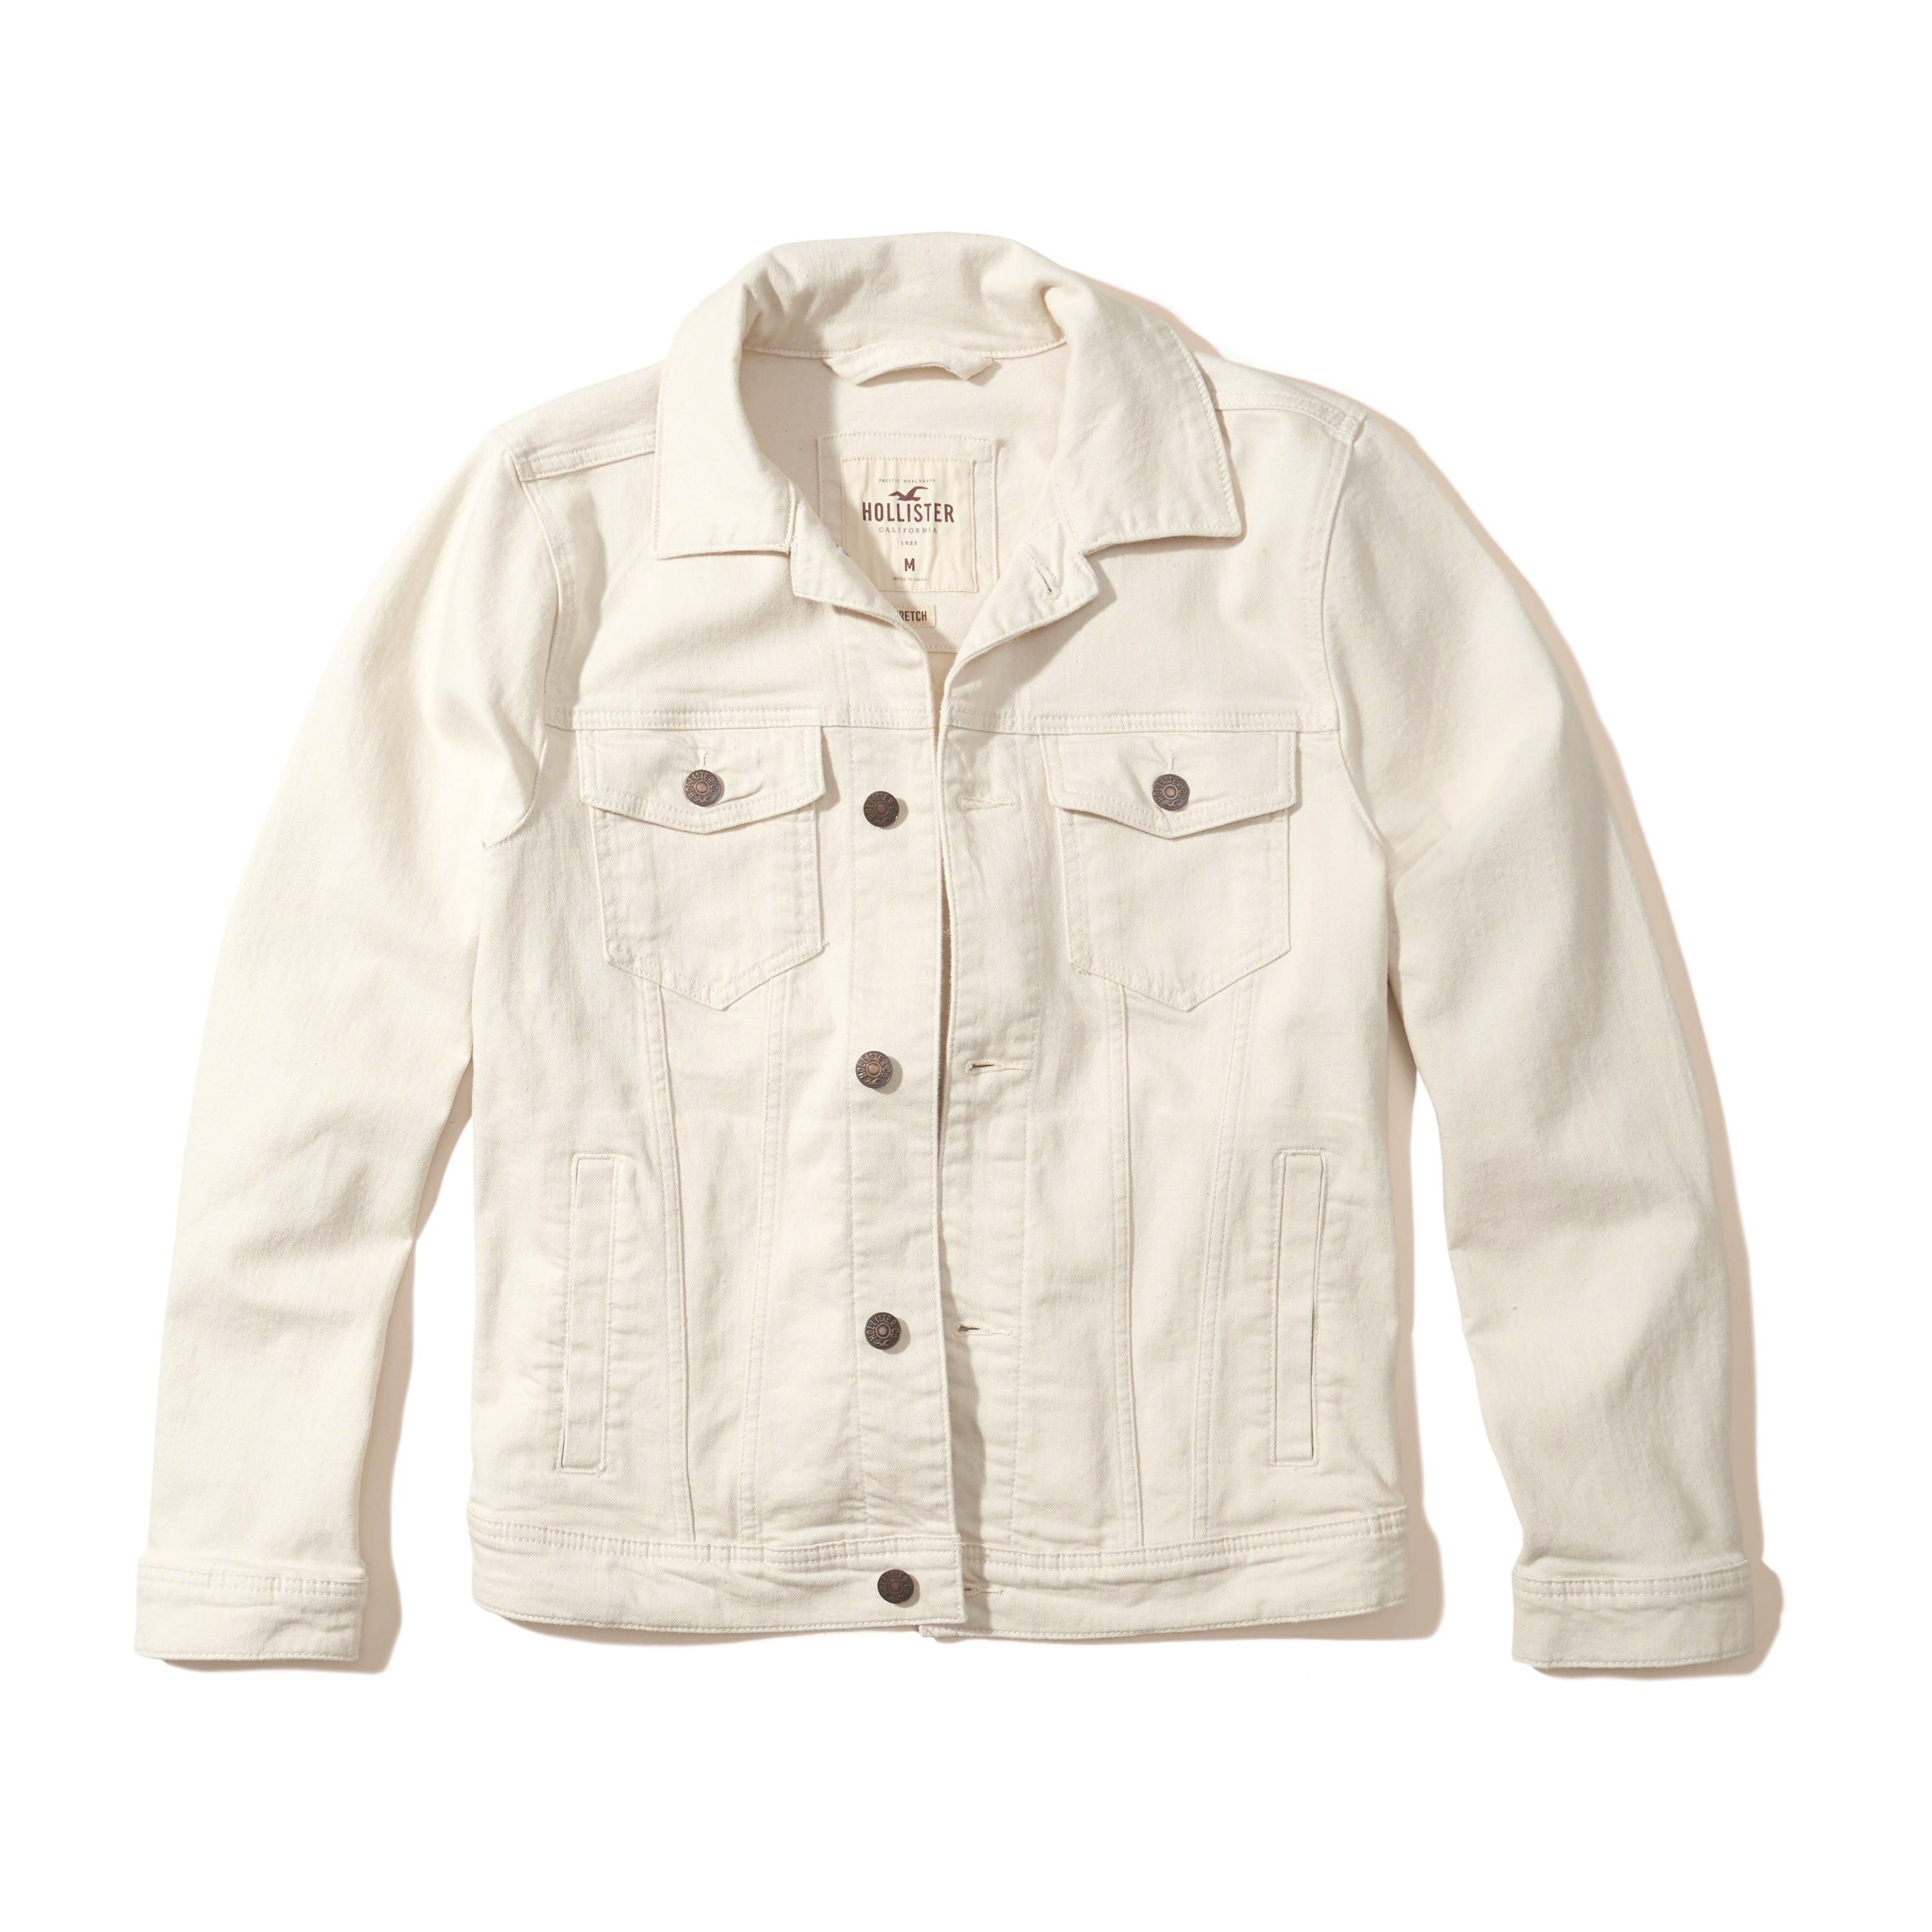 Lyst - Hollister Stretch Denim Jacket in White for Men